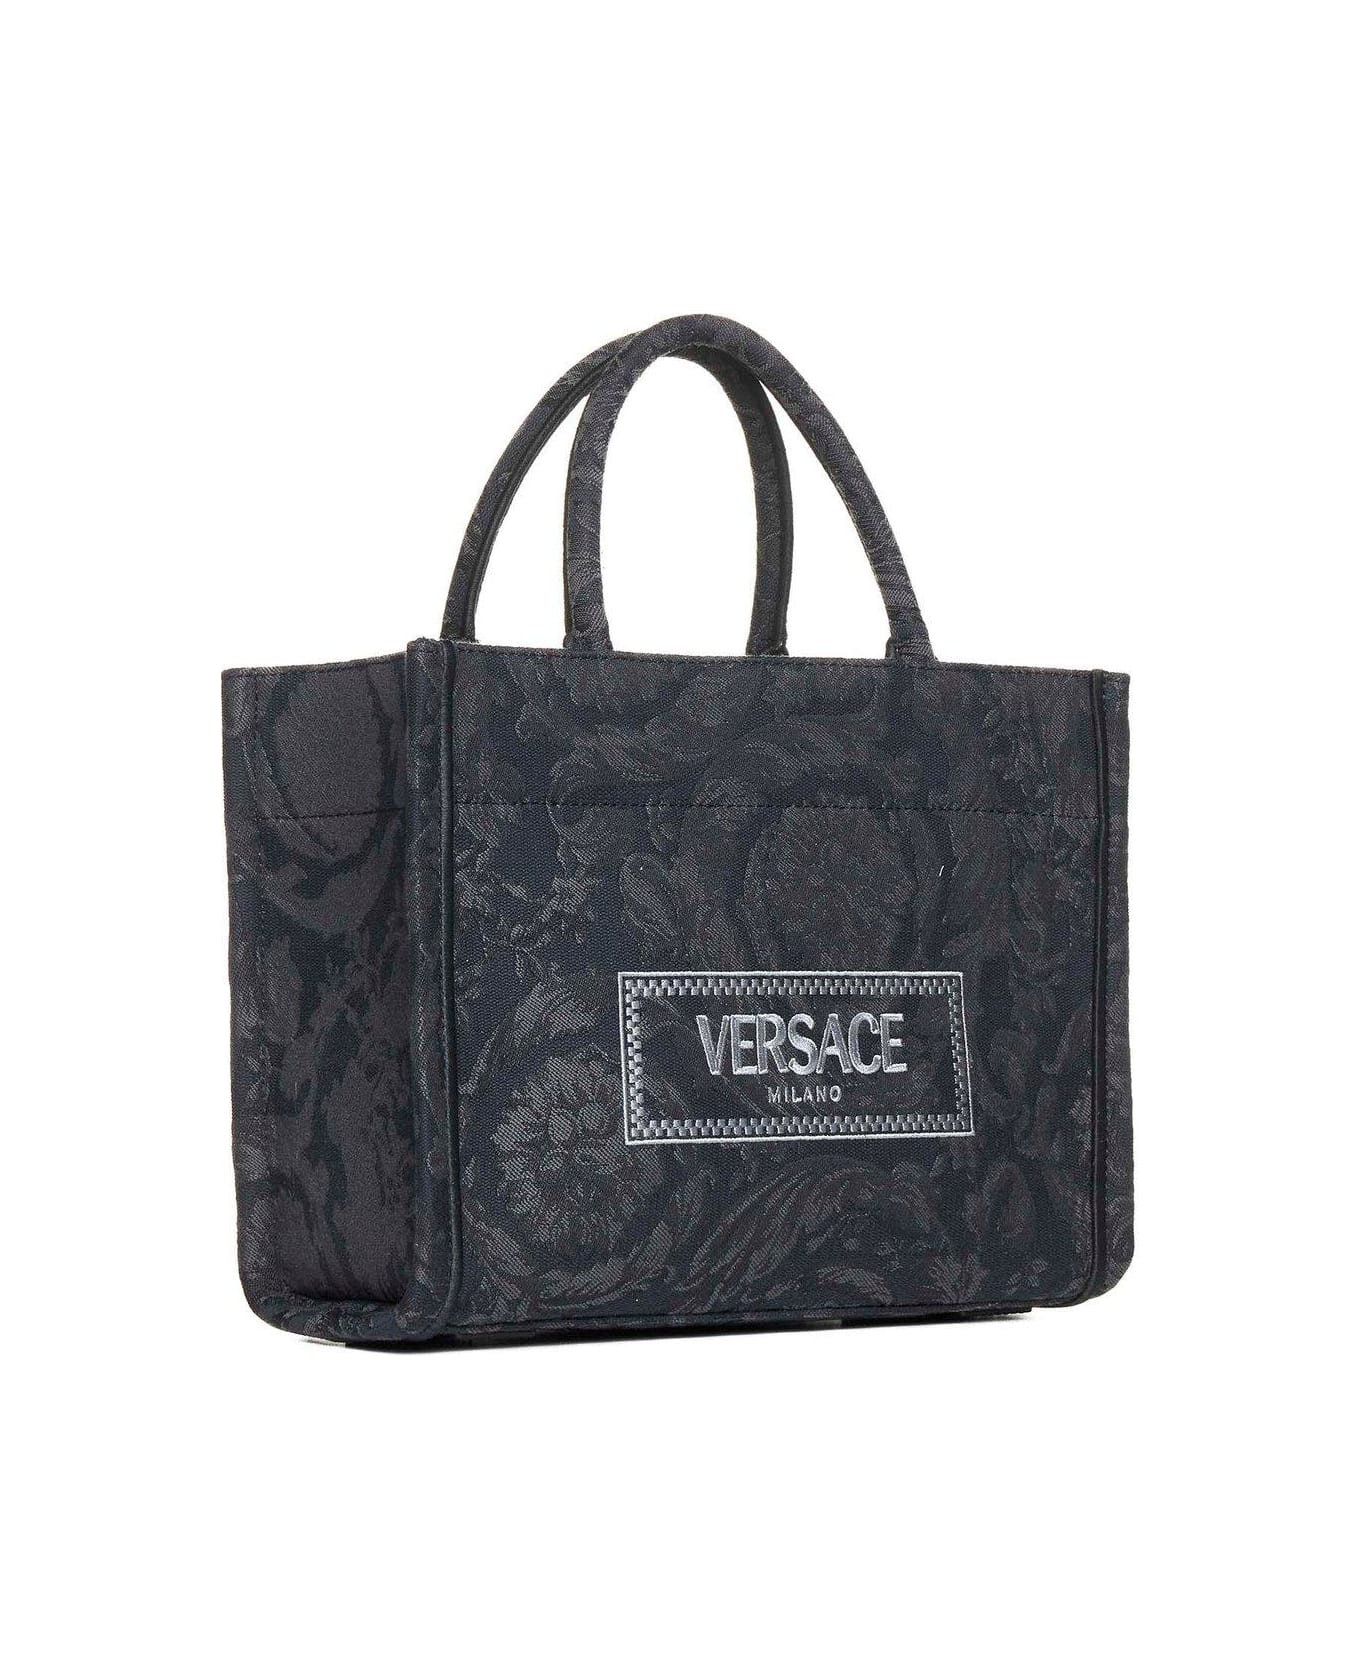 Versace All-over Floral Motif Top Handle Bag - Black+black-versace-gold トートバッグ